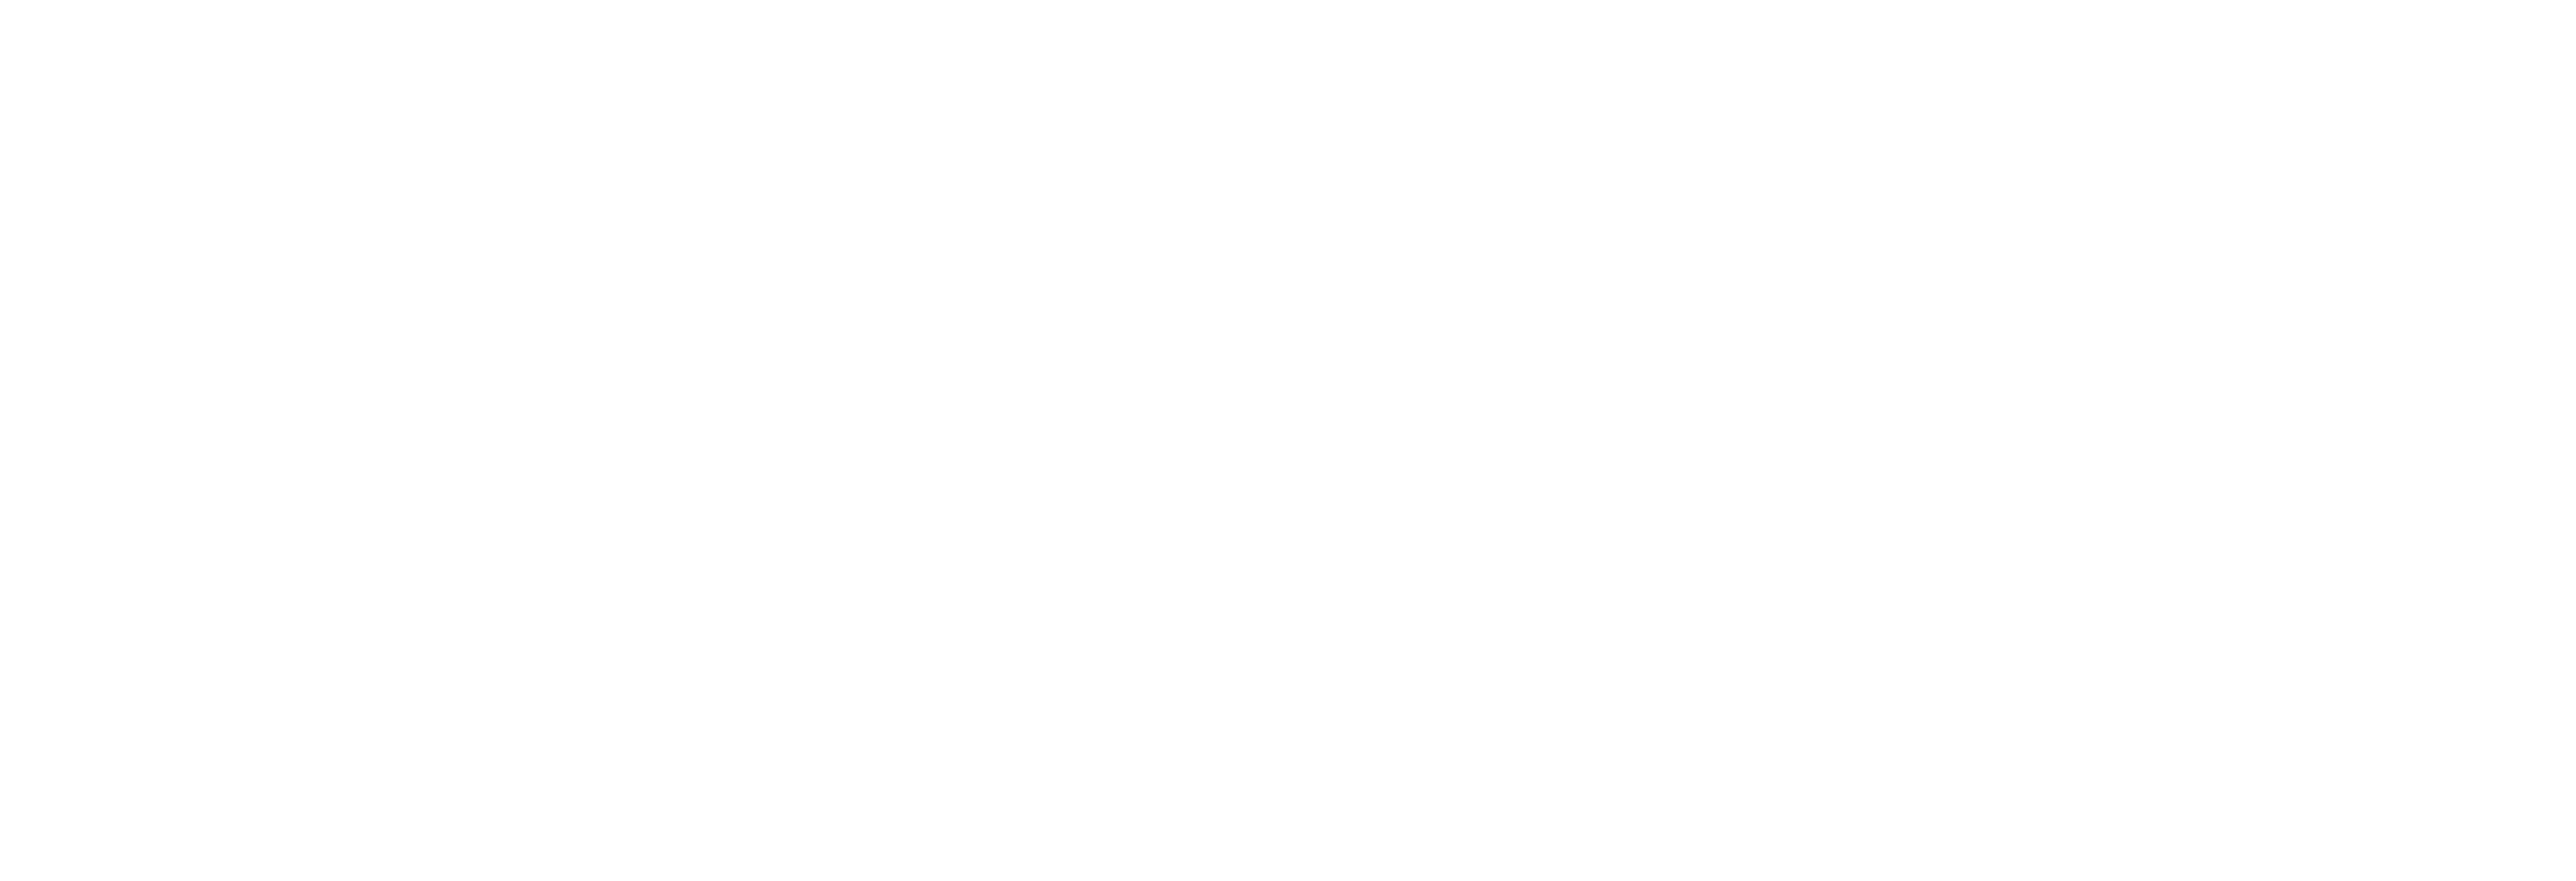 Authentic Kilimanjaro